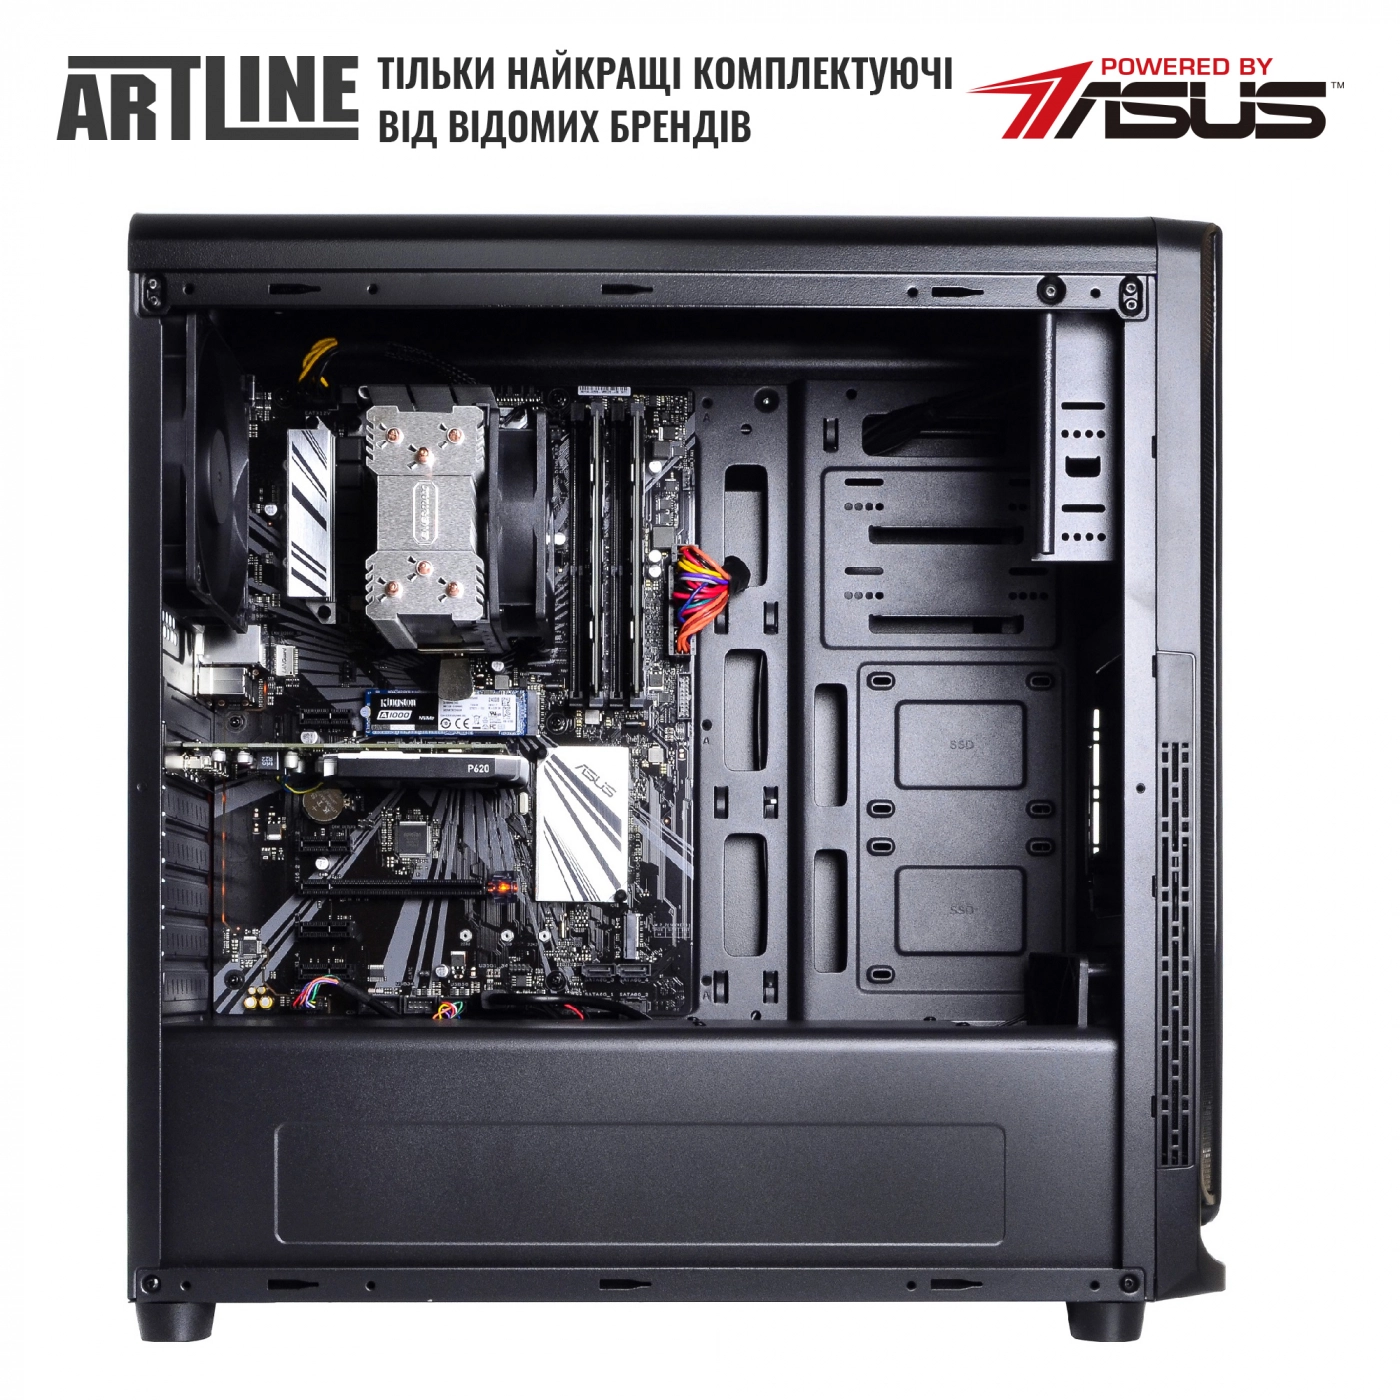 Купити Сервер ARTLINE Business T25v30 - фото 5